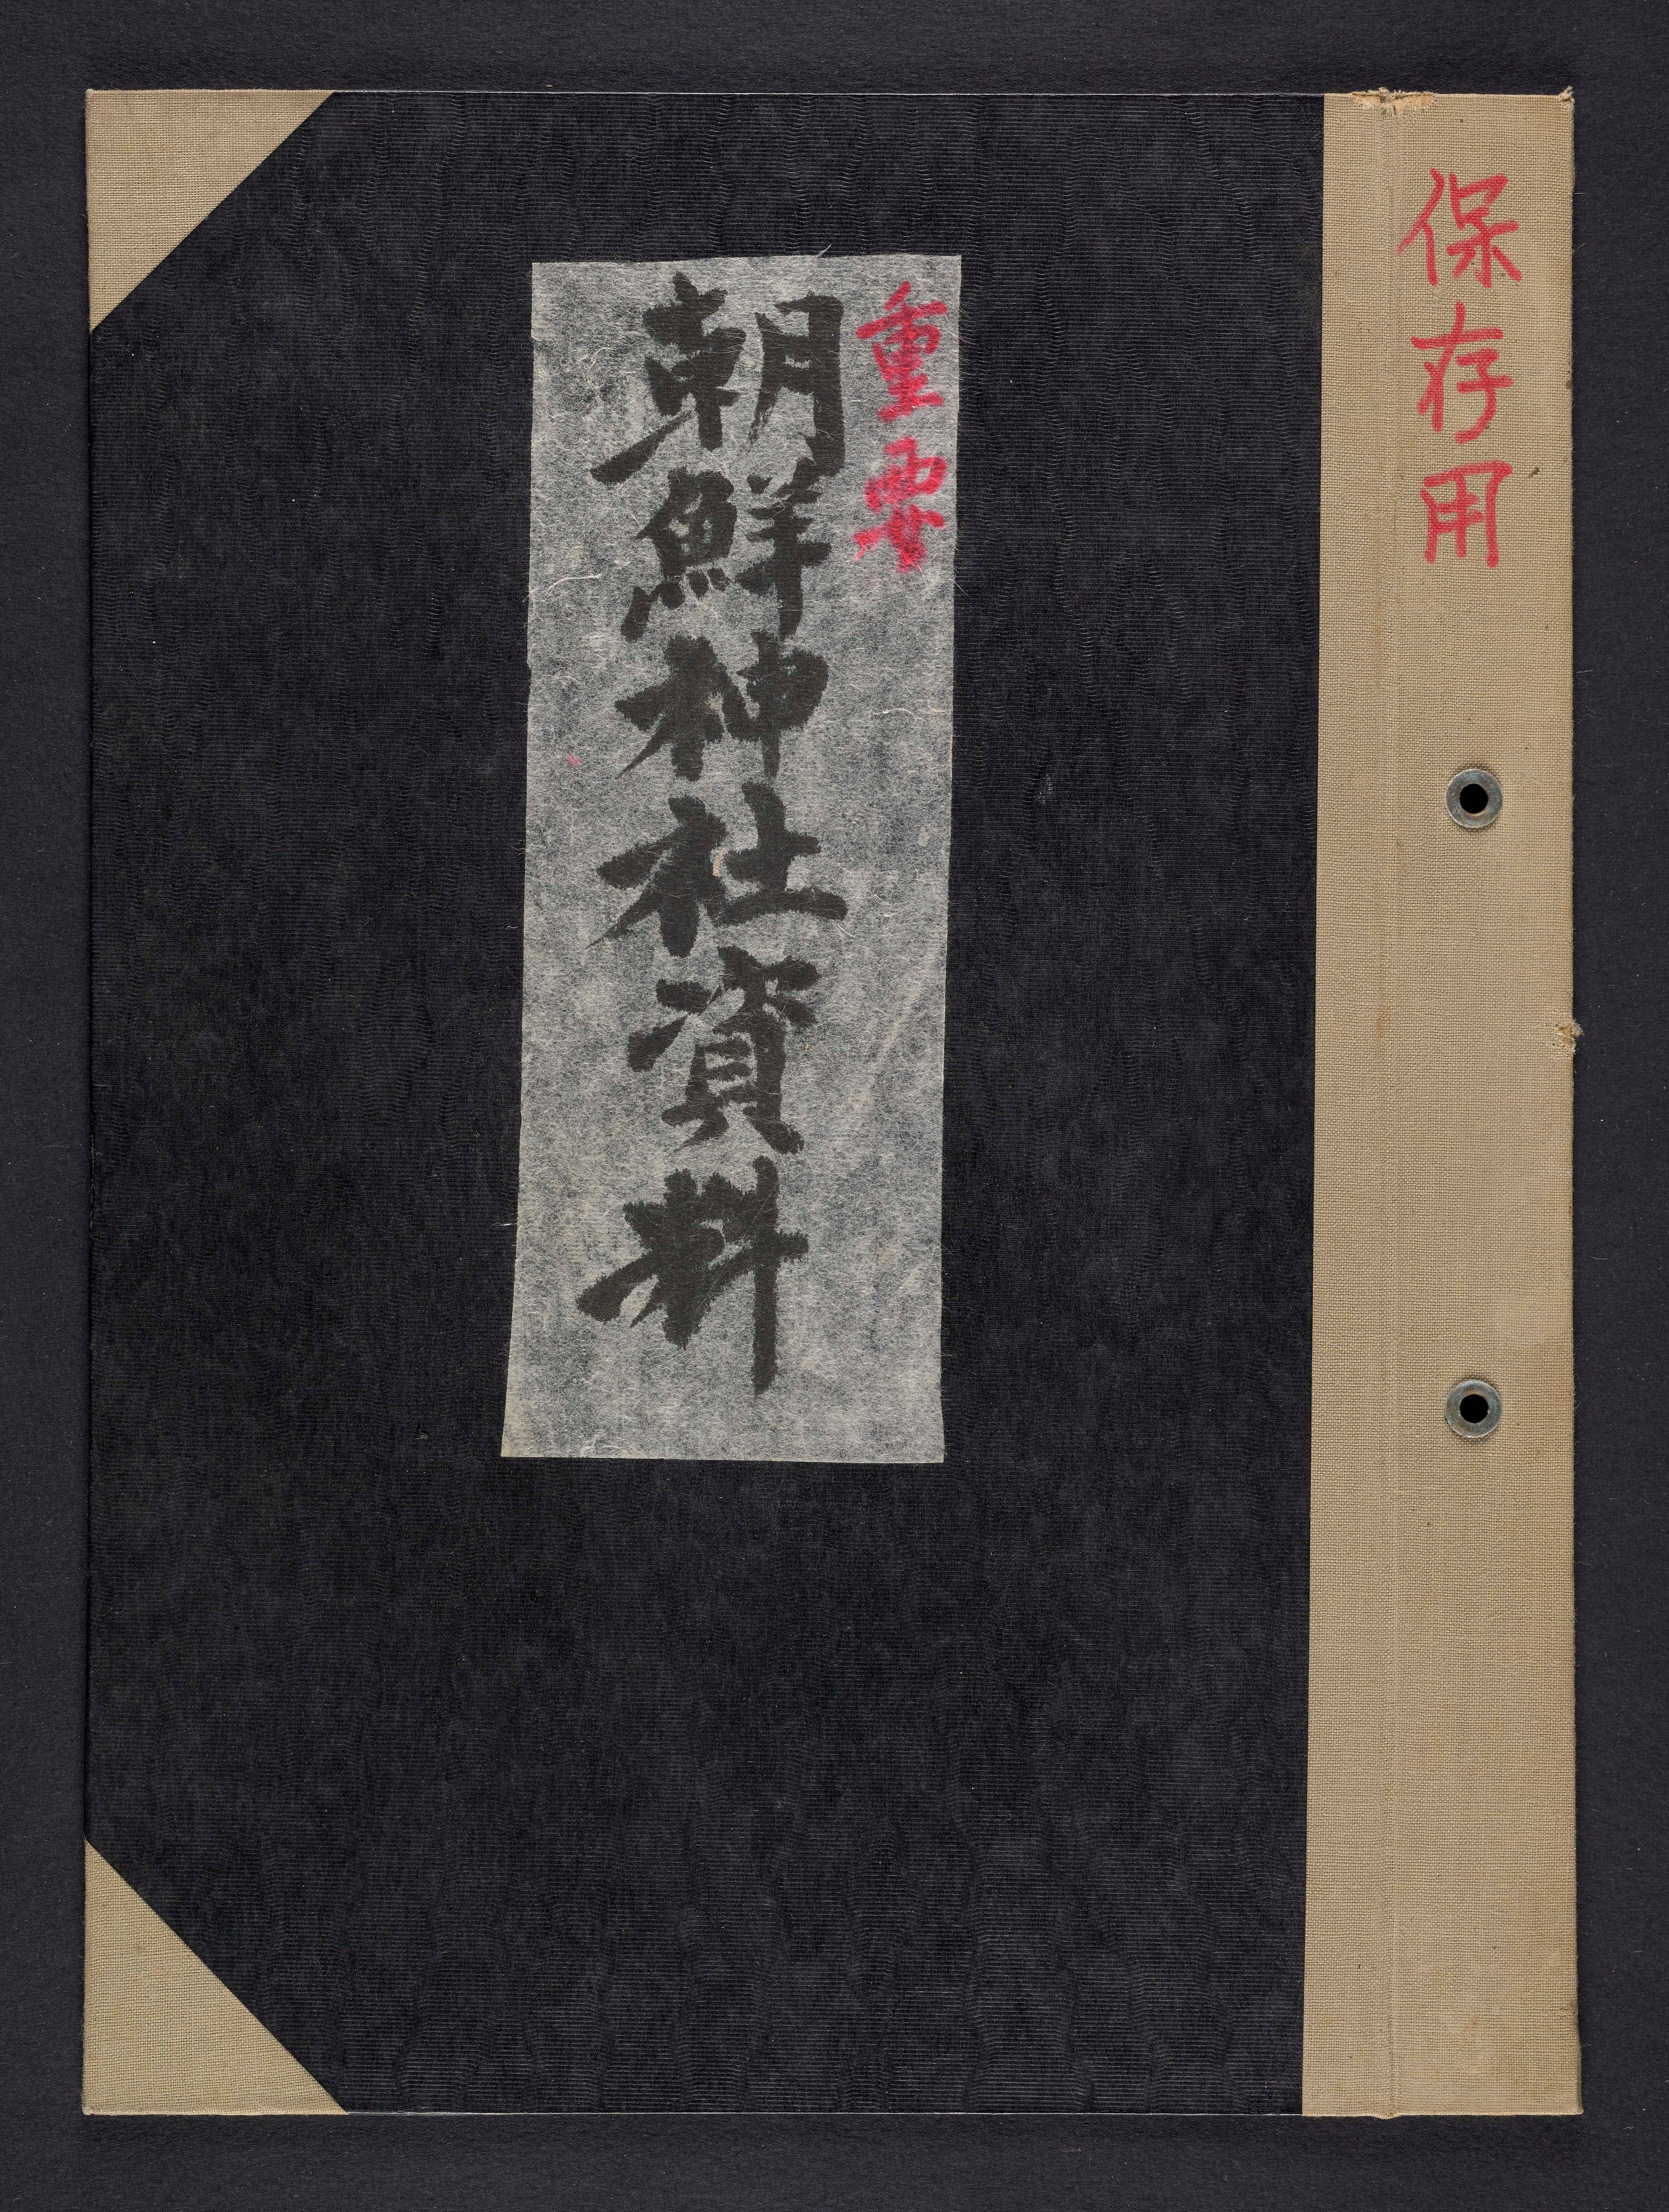 A book cover displays Korean text.